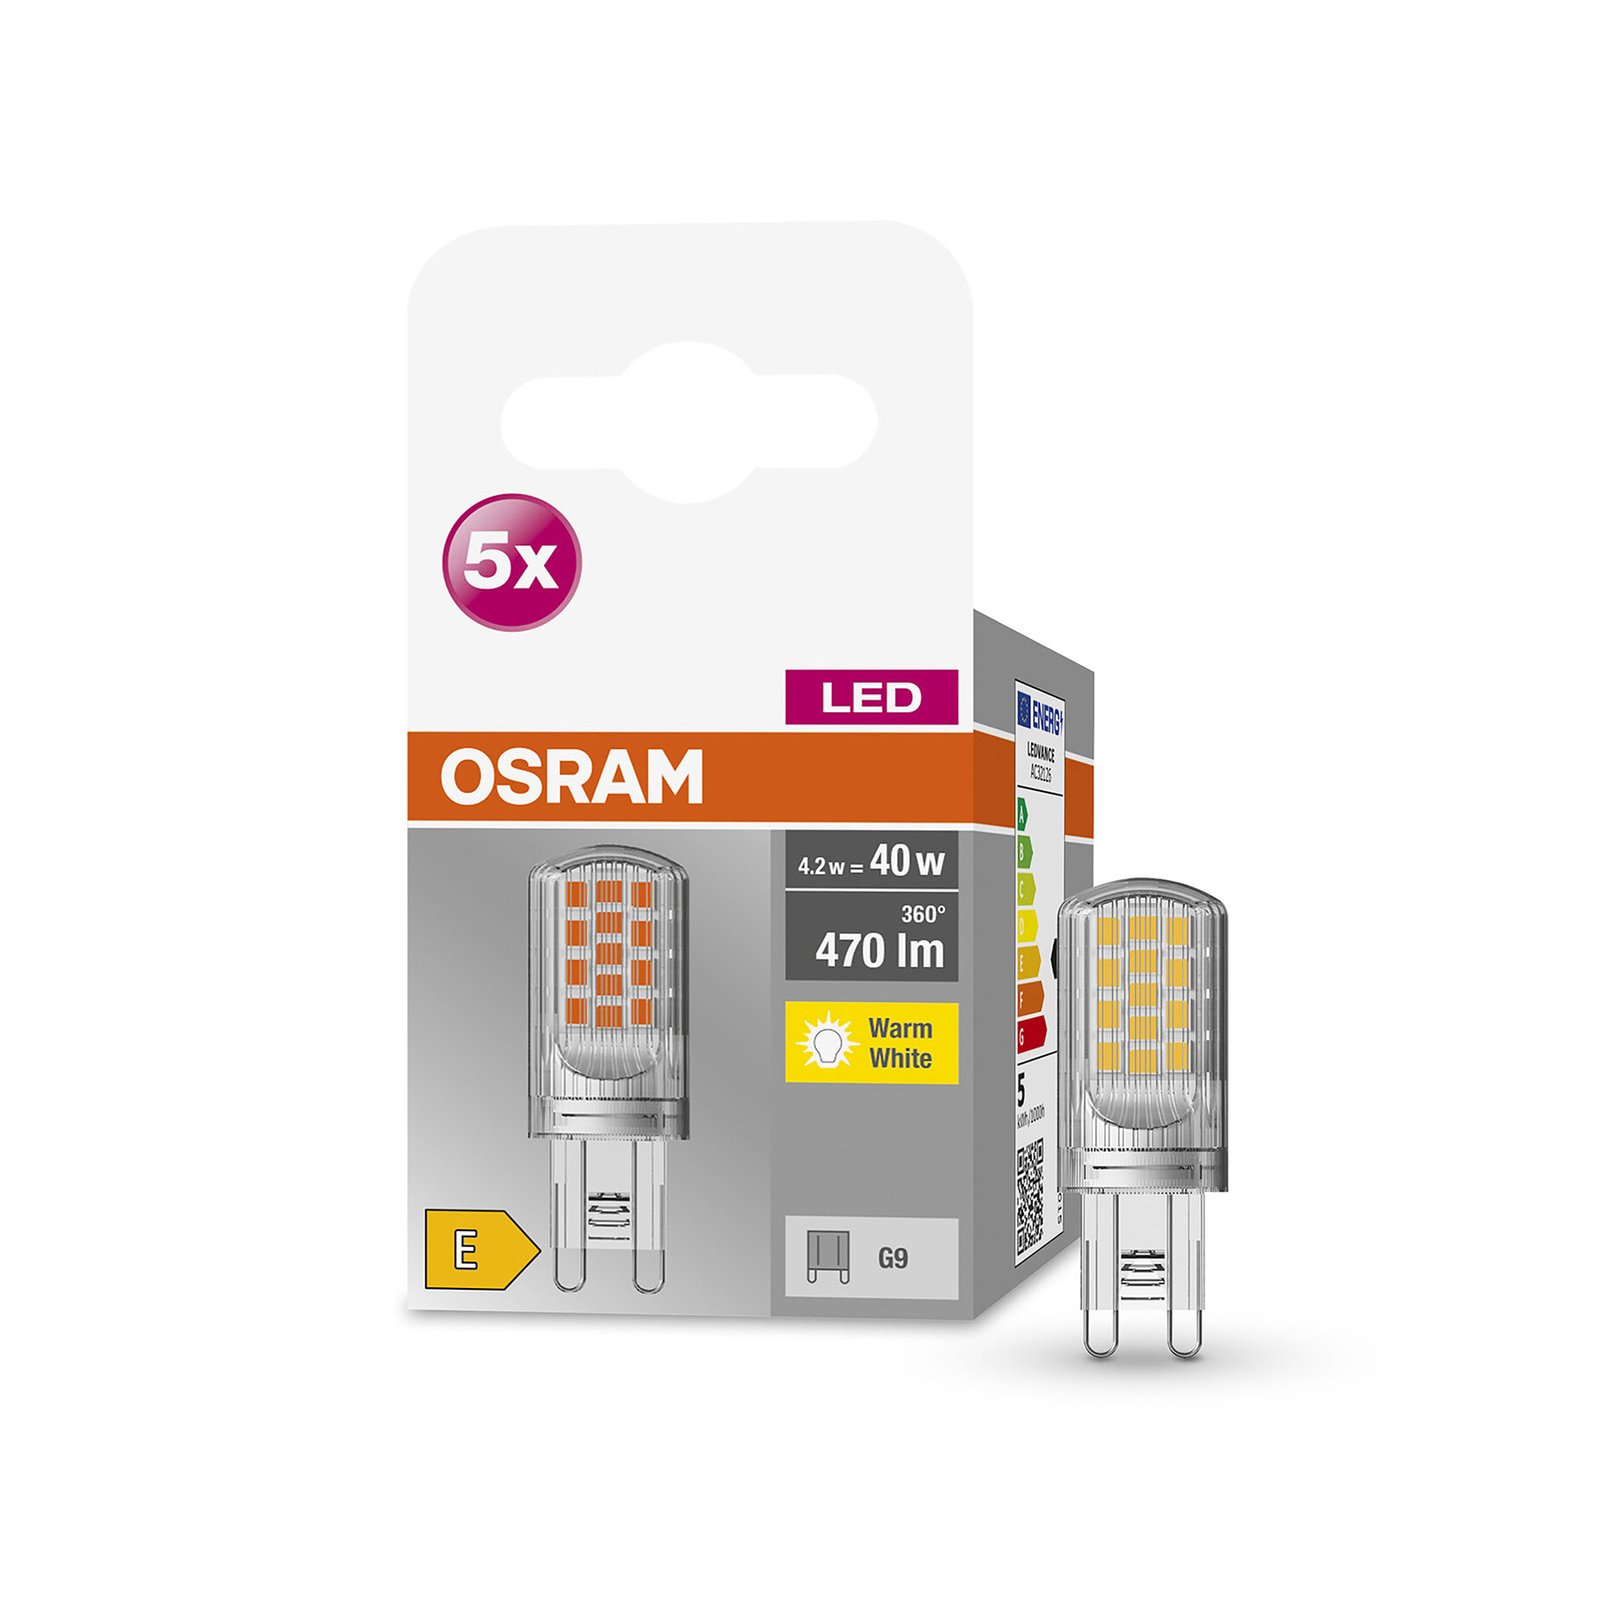 OSRAM Base PIN LED pin base G9 4,2W 470lm 5s